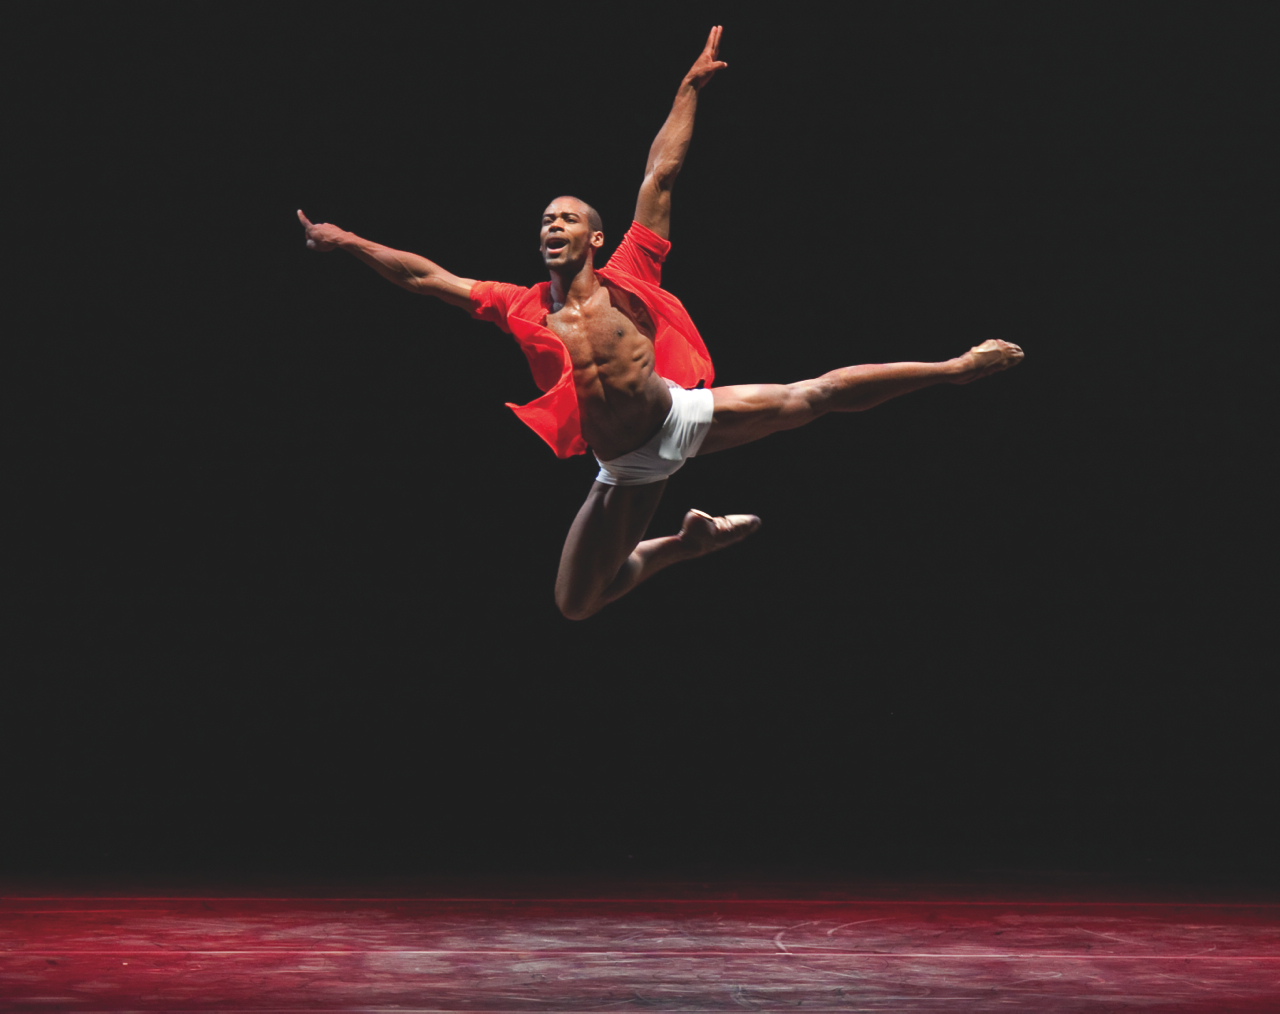 Elite Dance Tournament, photo by Sharen Bradford - Courtesy of Complexions Contemporary Ballet